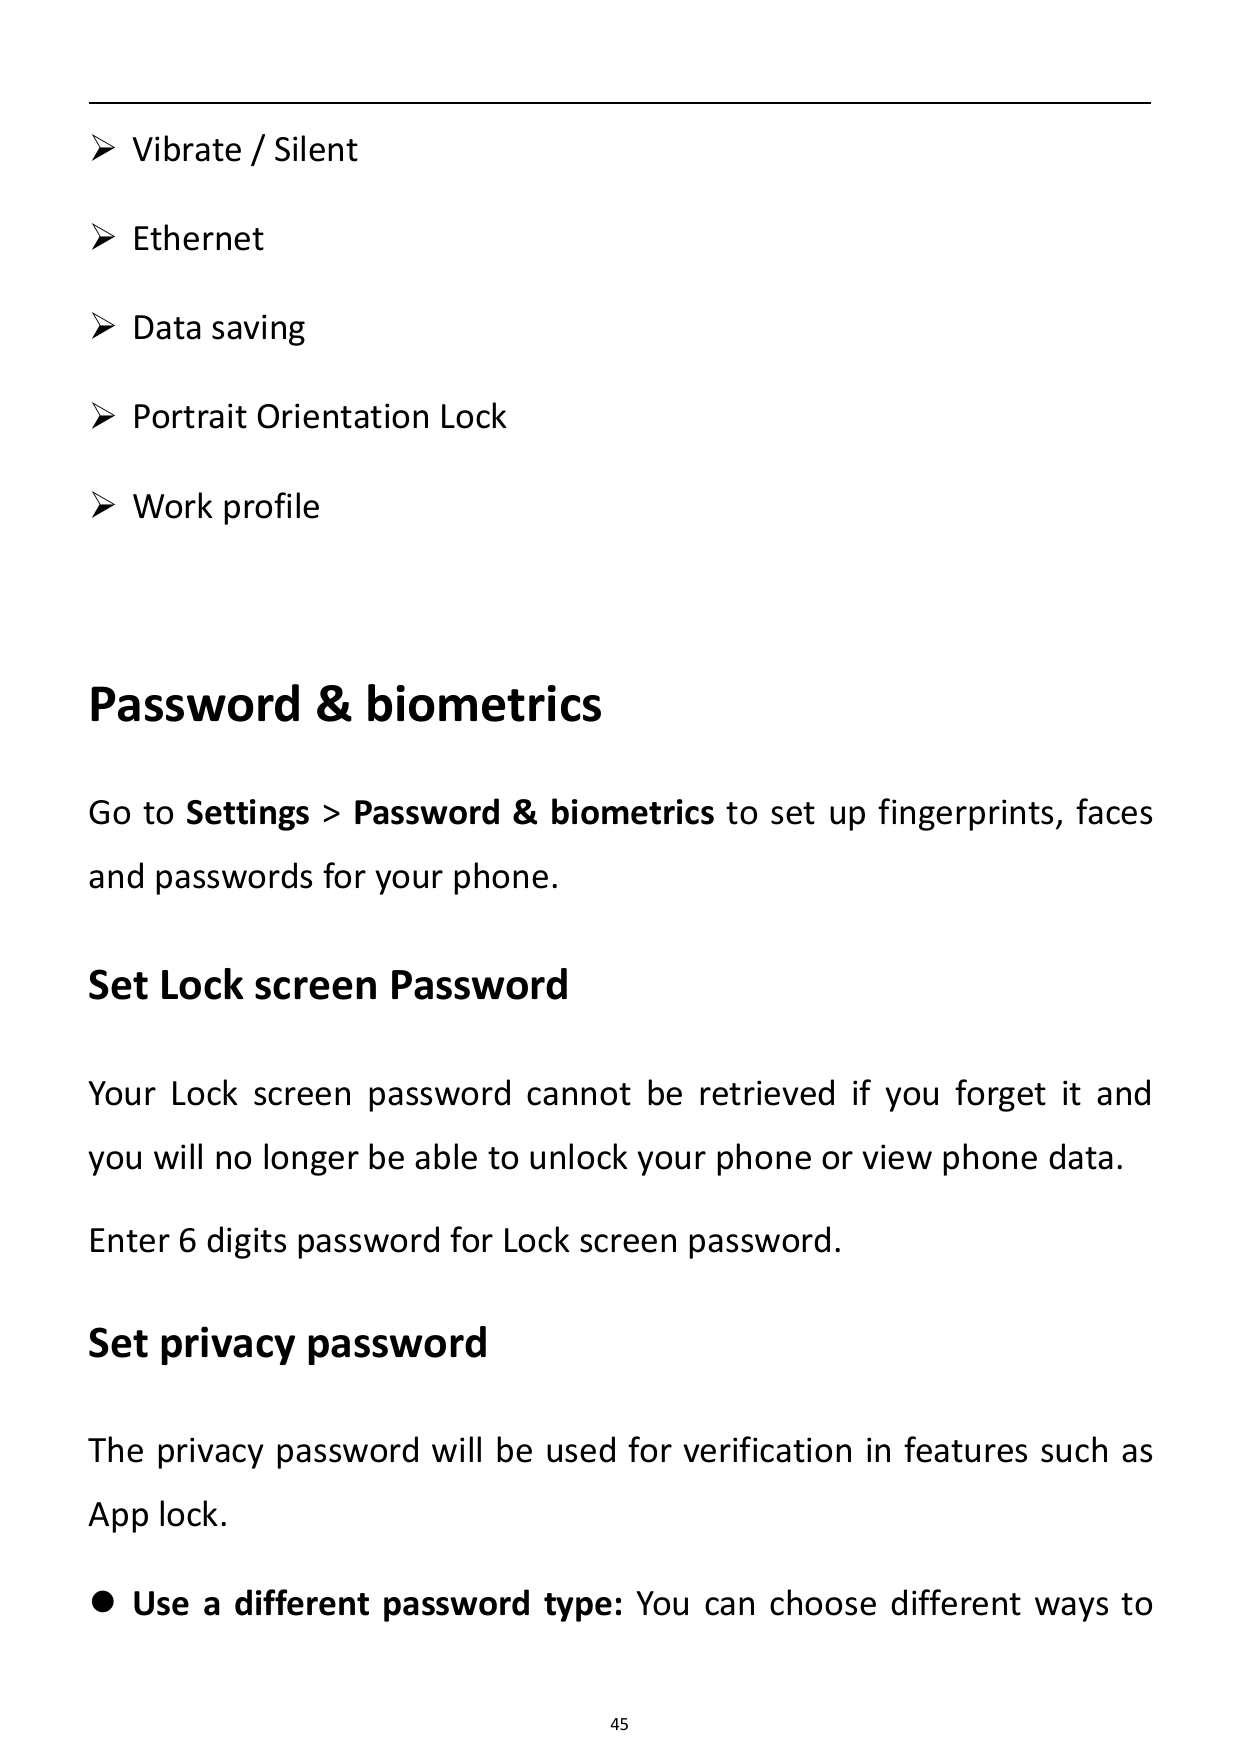  Vibrate / Silent Ethernet Data saving Portrait Orientation Lock Work profilePassword & biometricsGo to Settings > Password